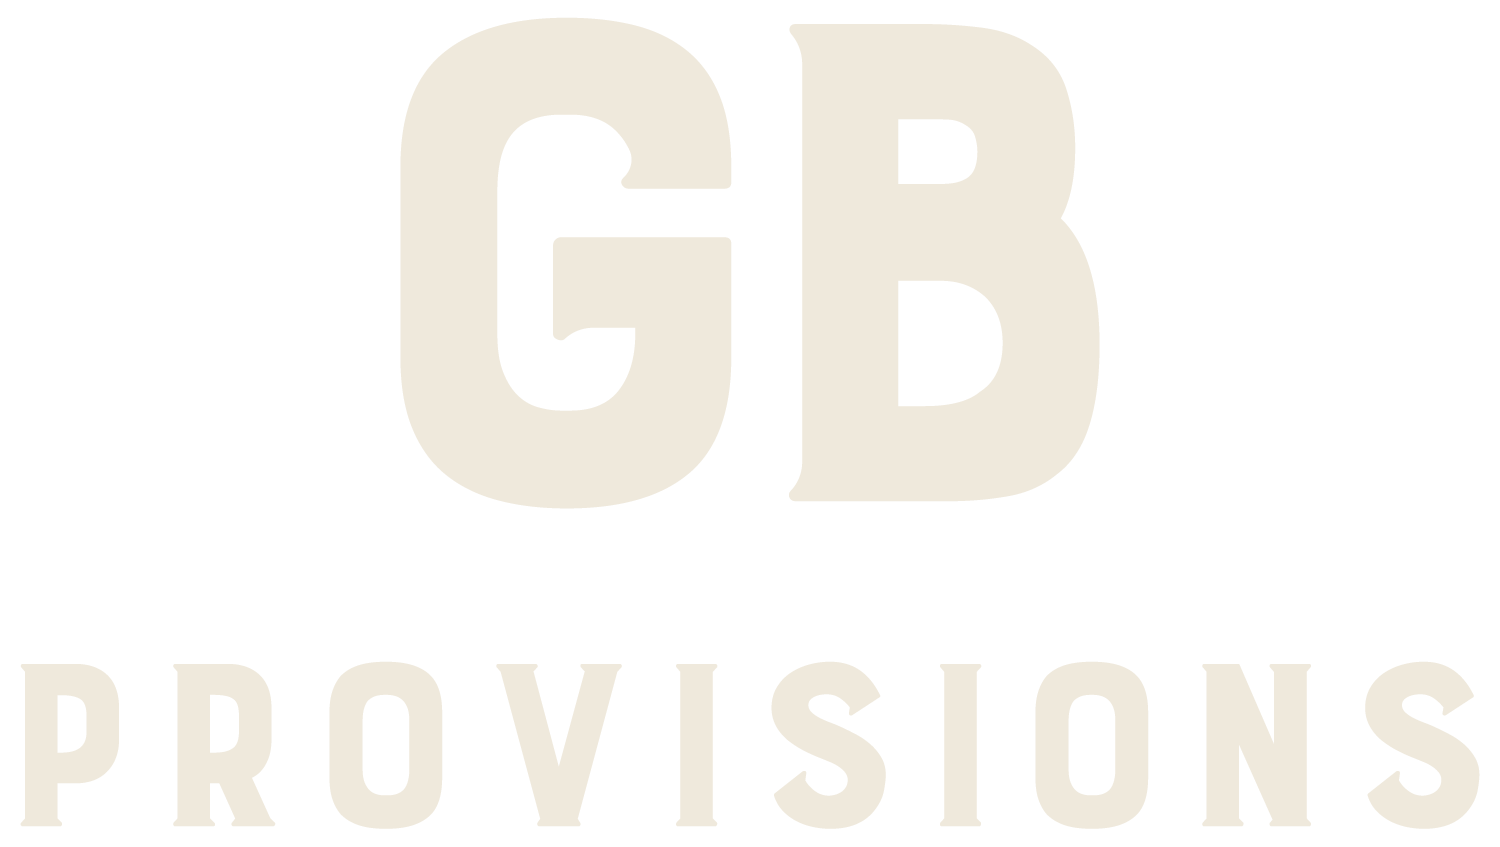 GB Provisions